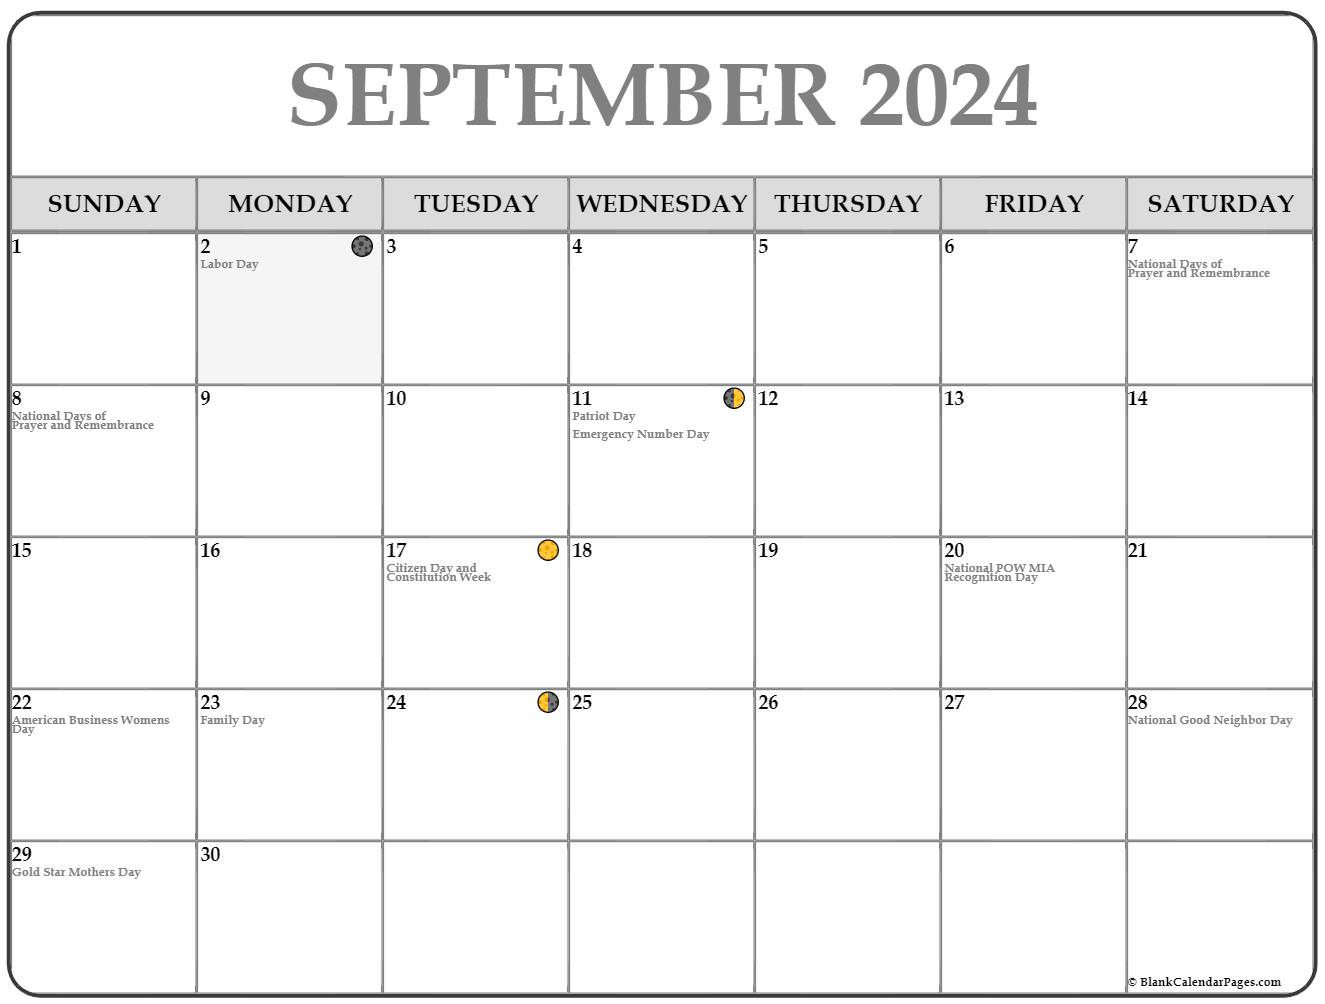 September 2024 Lunar Calendar | Moon Phase Calendar